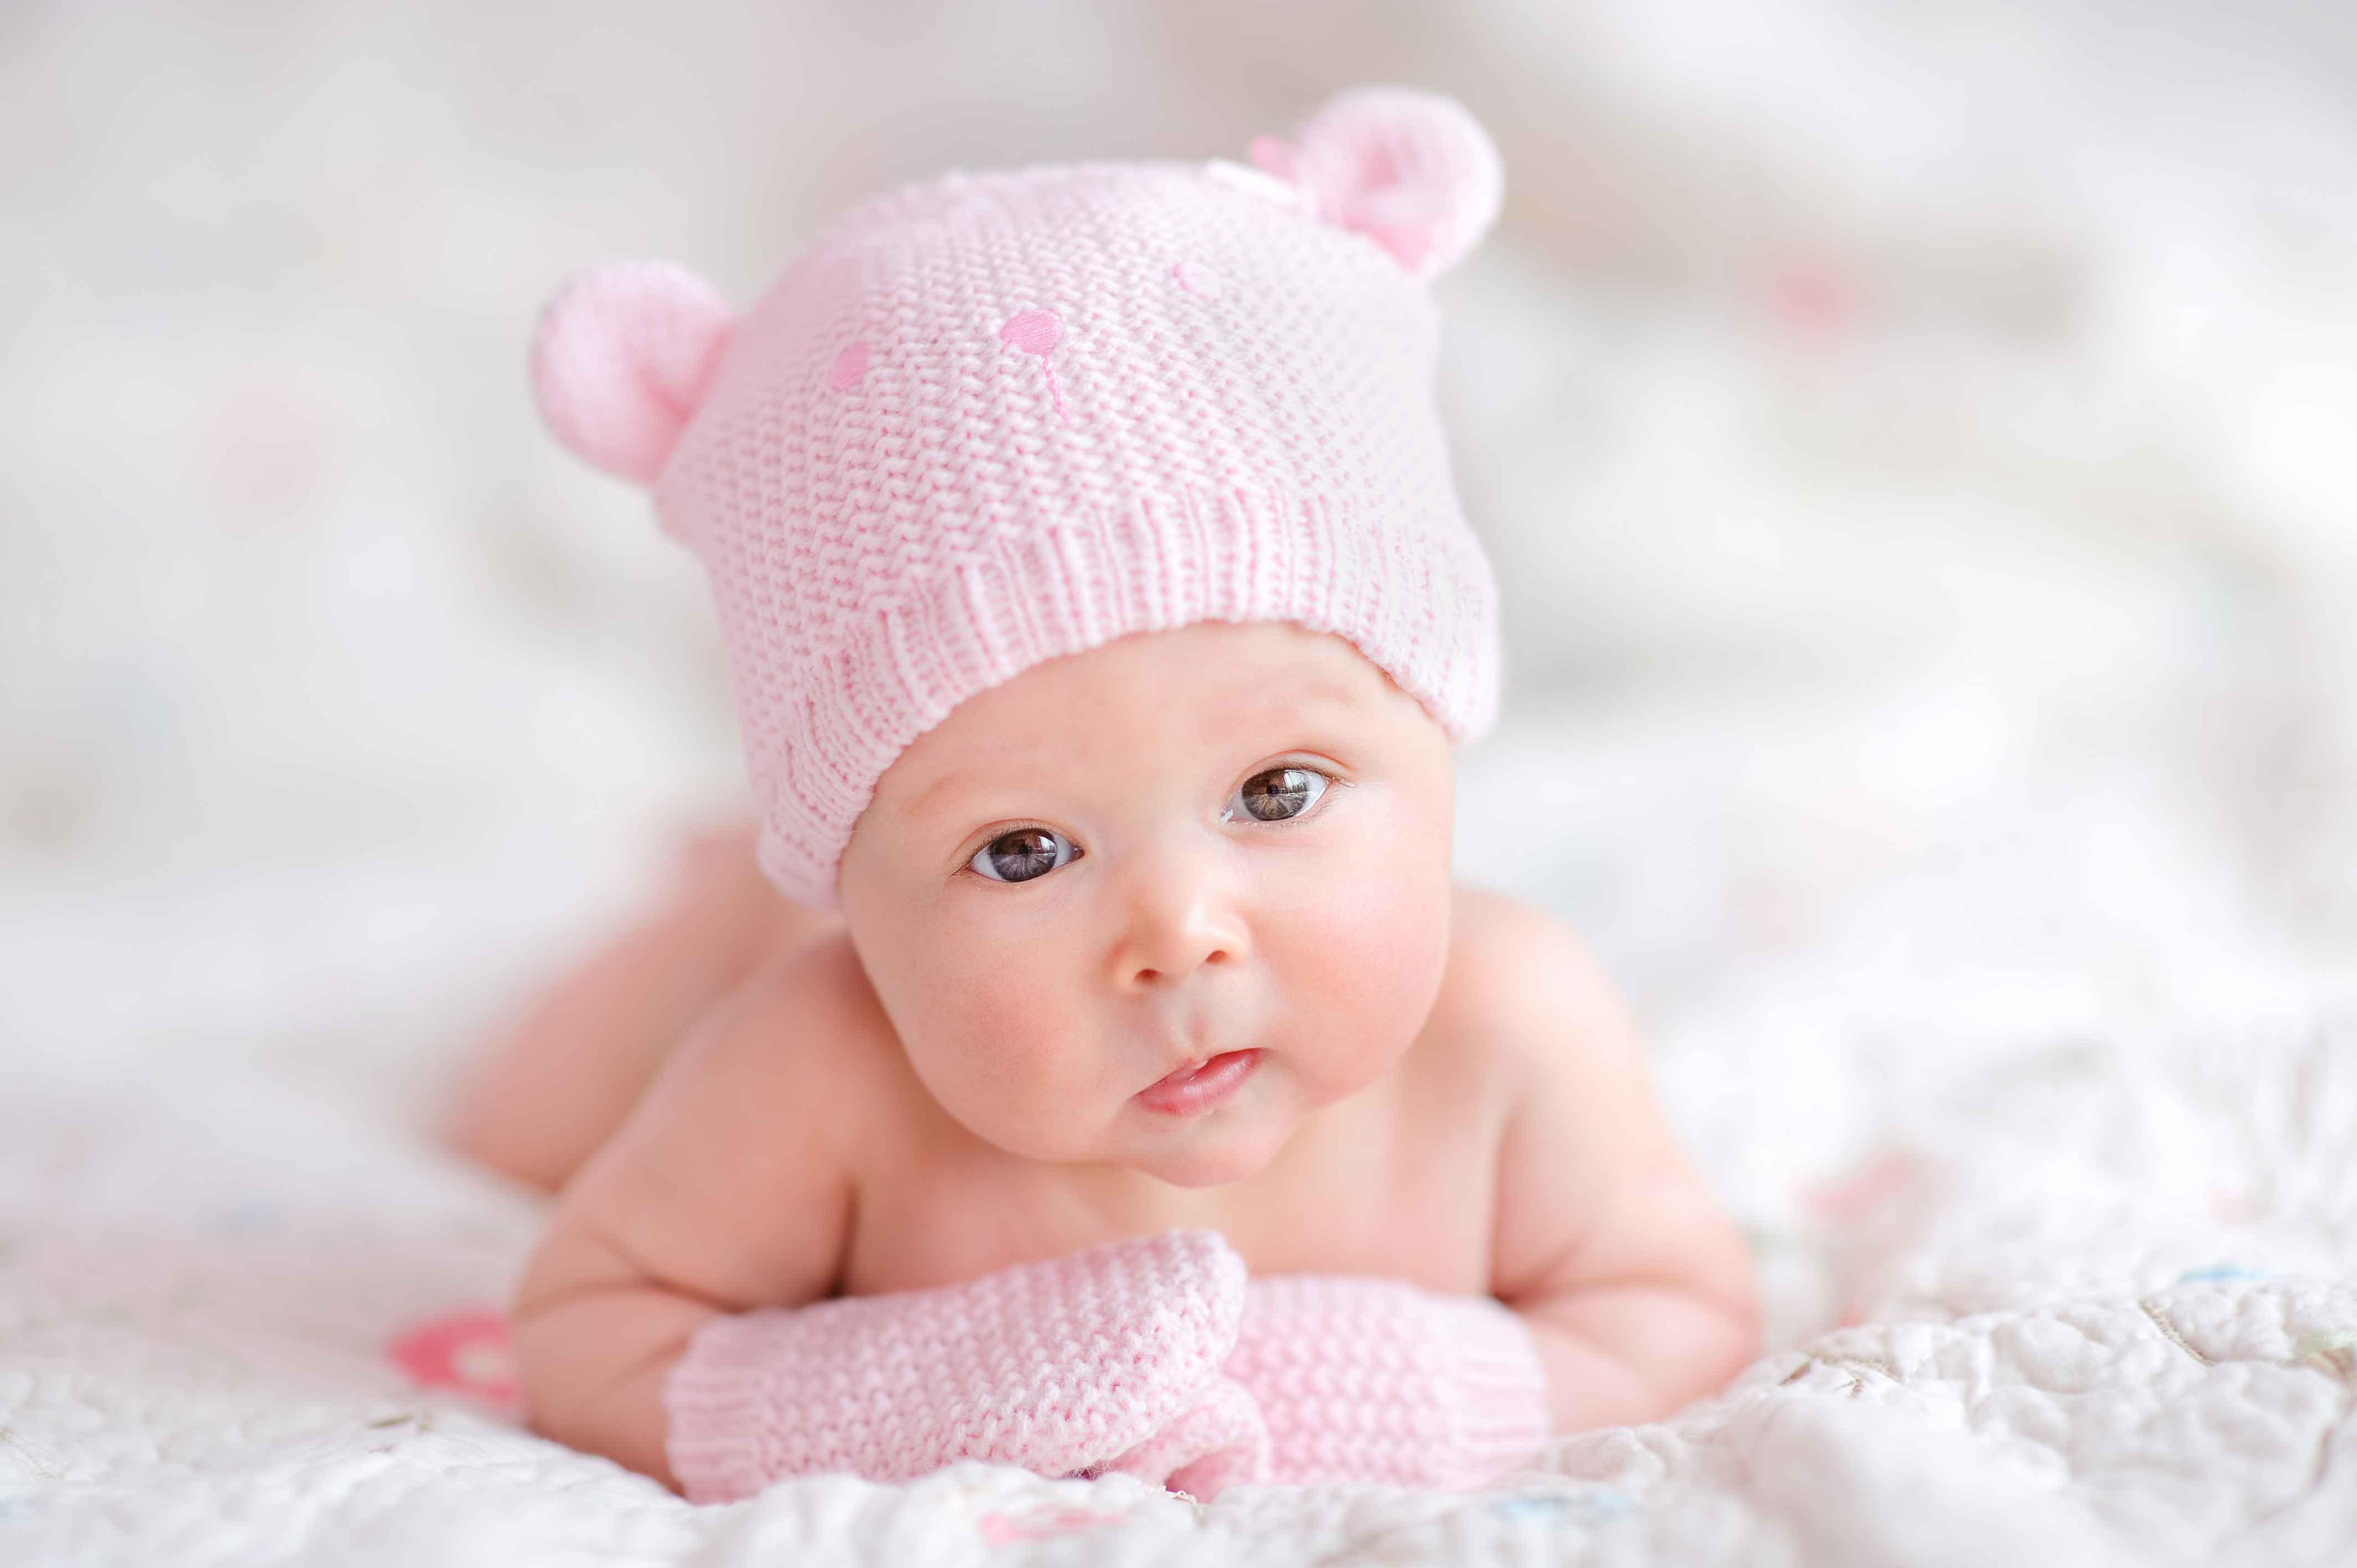 100+] Cute Baby Girl Wallpapers | Wallpapers.com